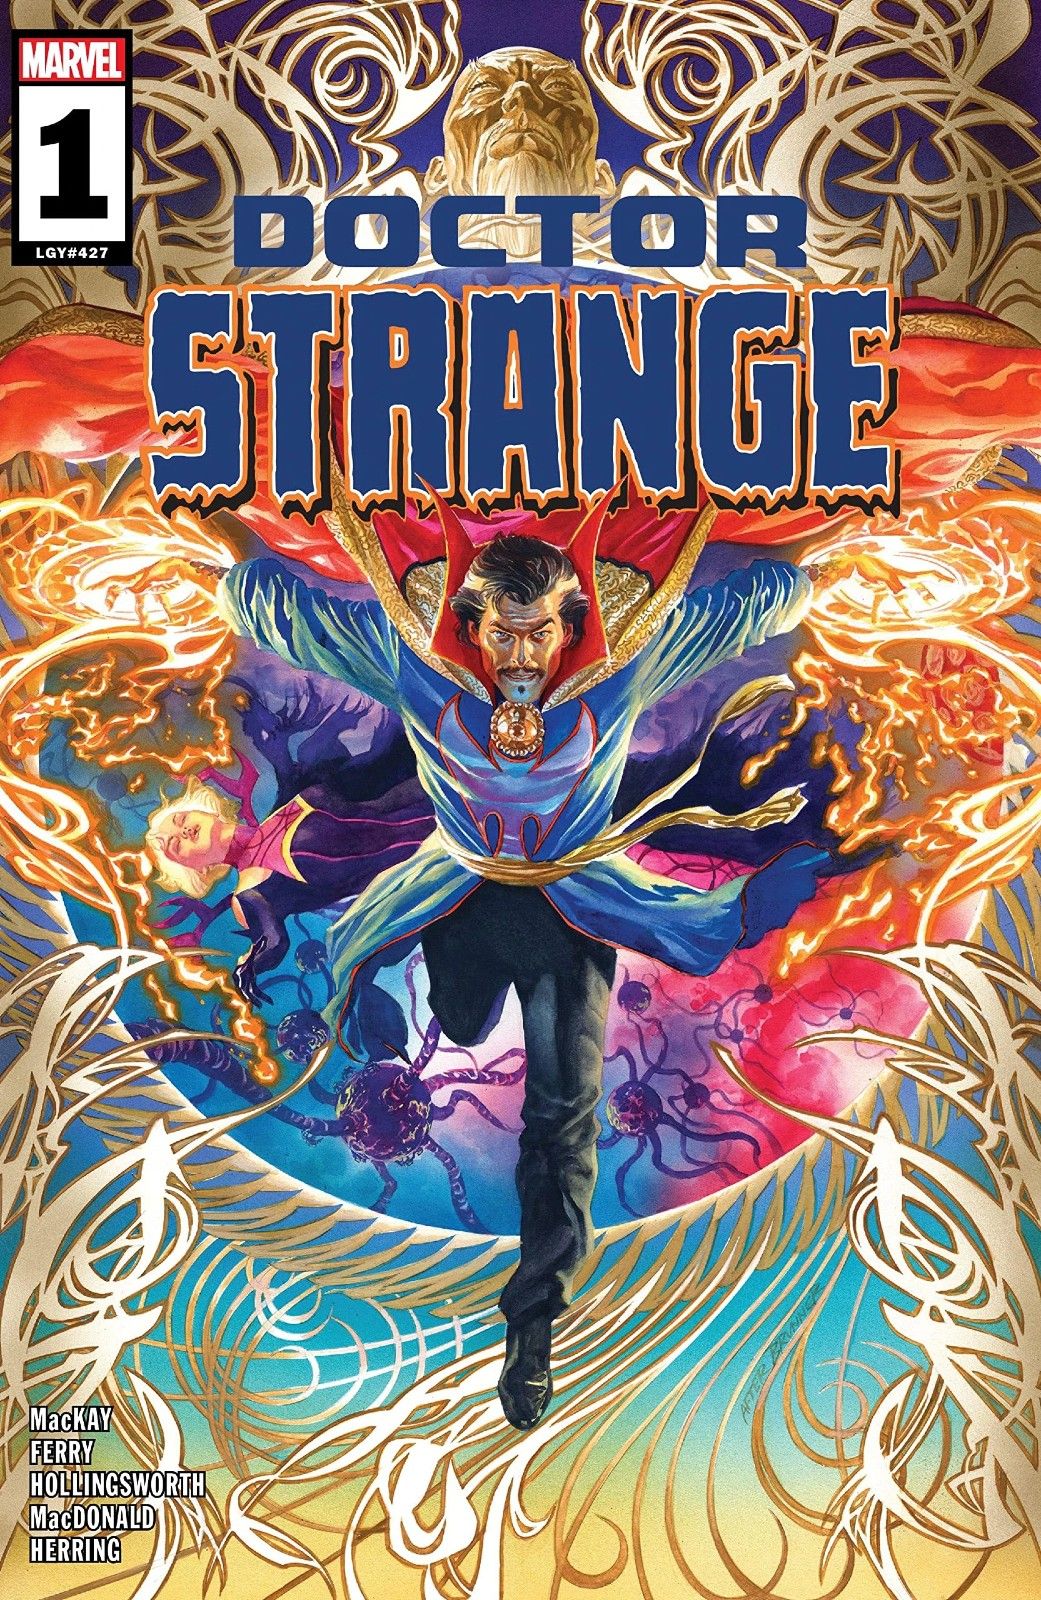 Stephen Strange using his mystic powers in Doctor Strange (Vol. 6) #1 by Marvel Comics